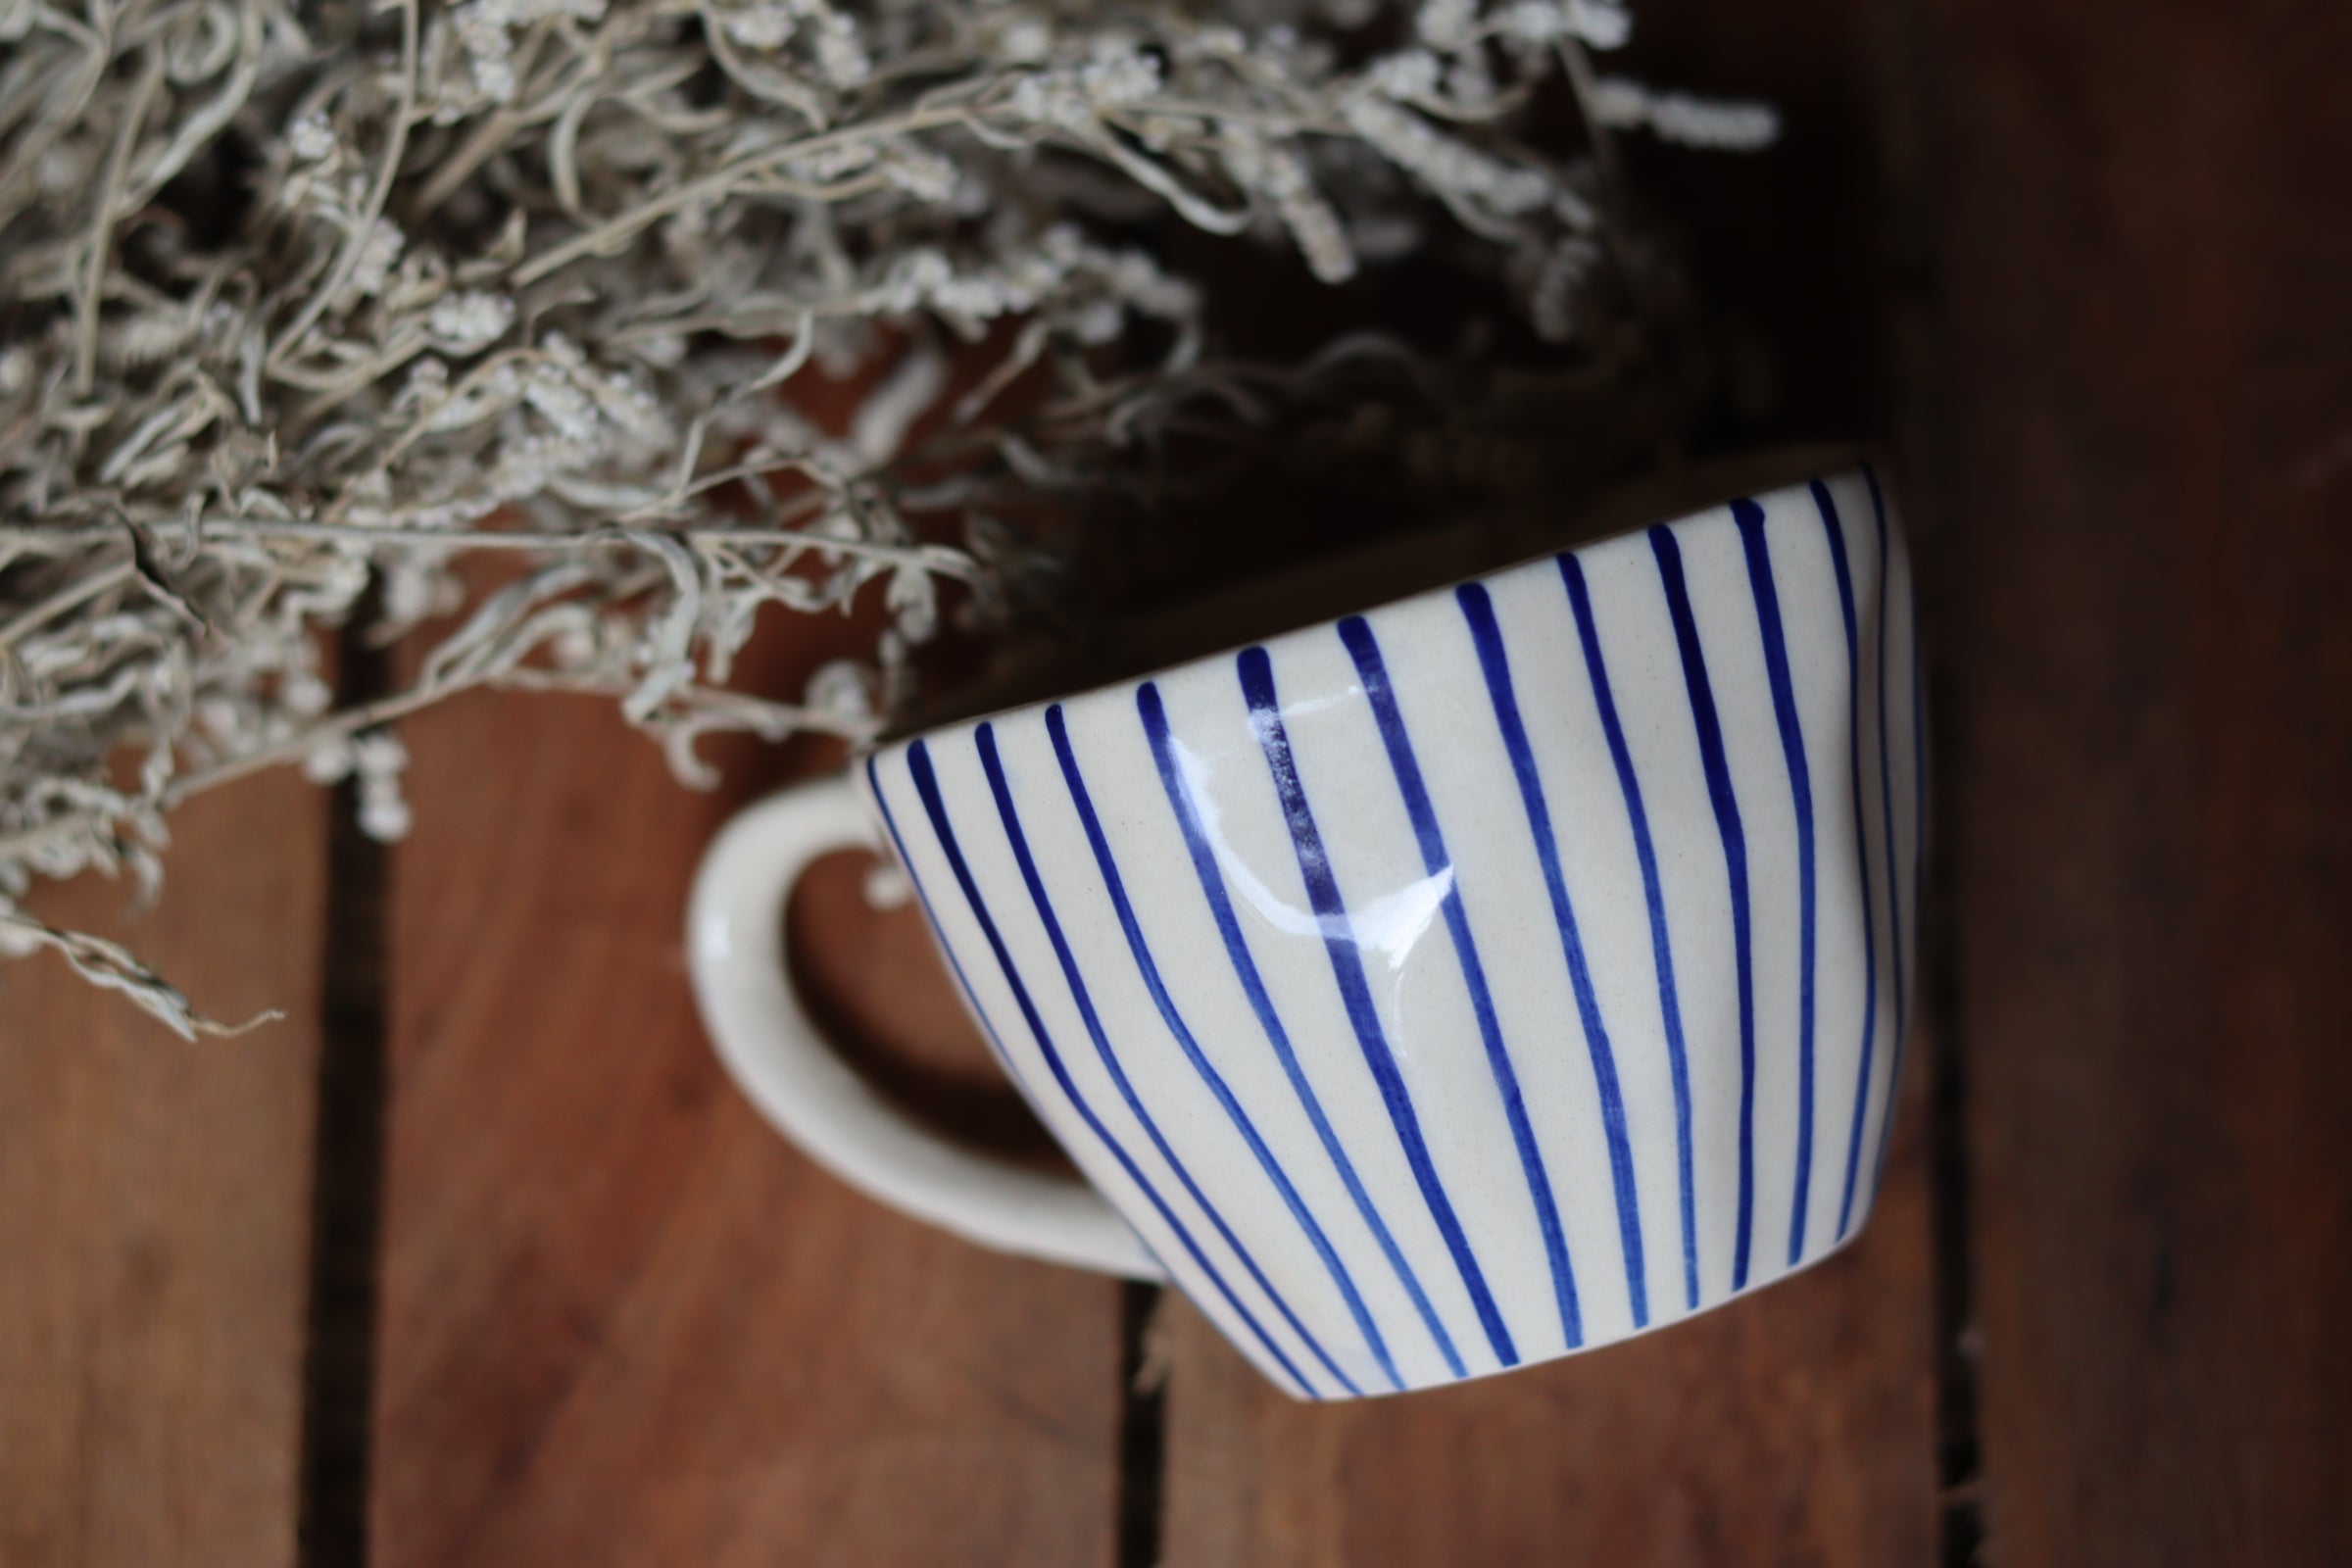 Blue lined mug on wooden surface